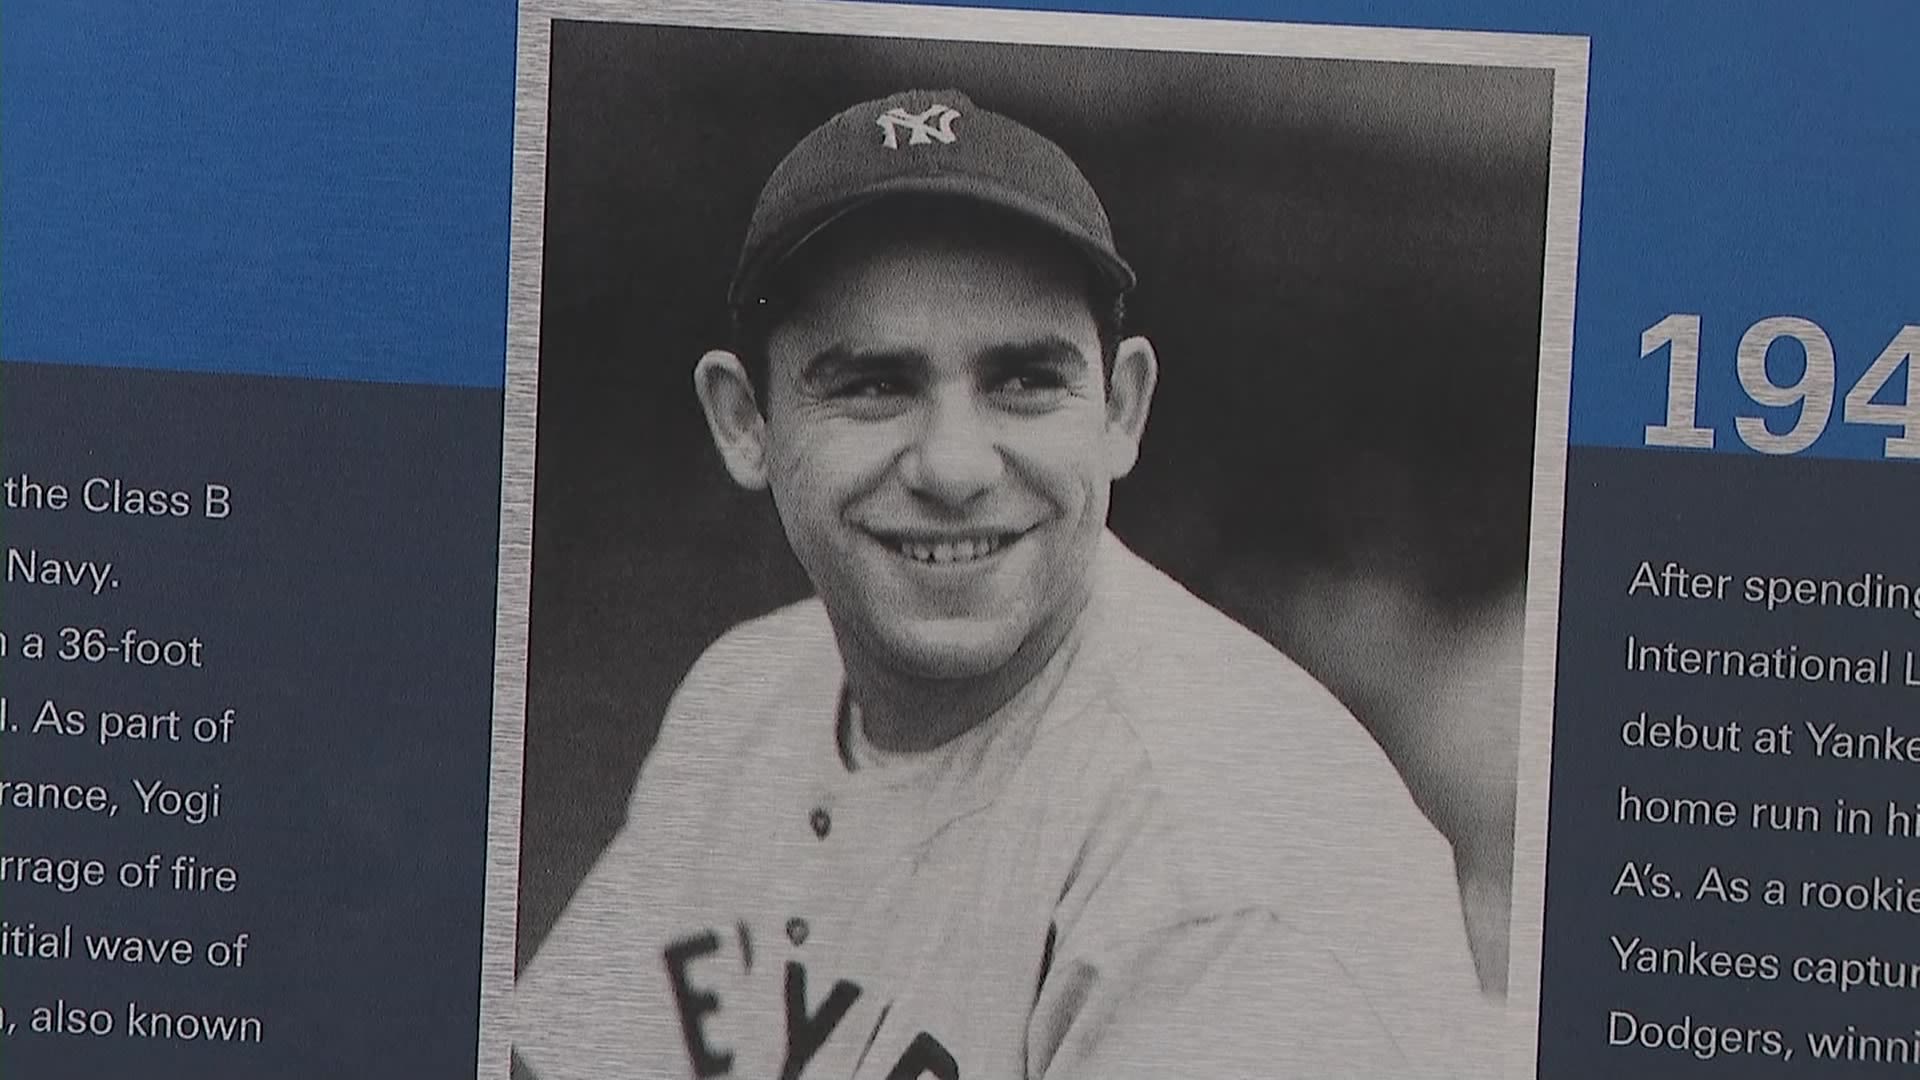 Yogi Berra's legacy: The most beloved man in baseball